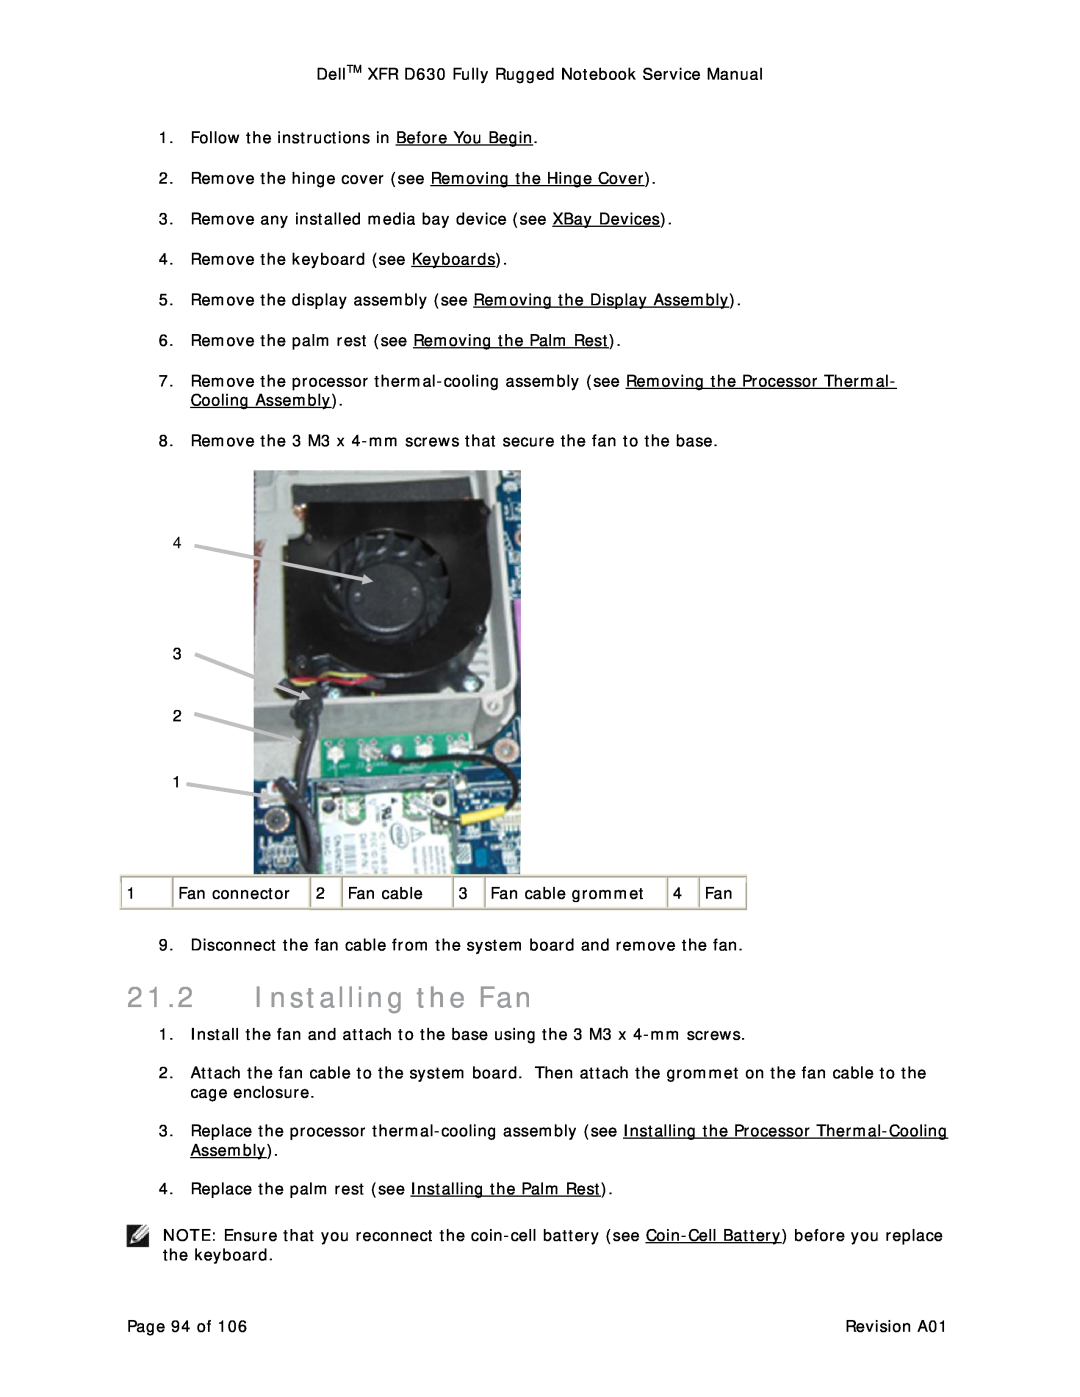 Dell D630 service manual Installing the Fan 